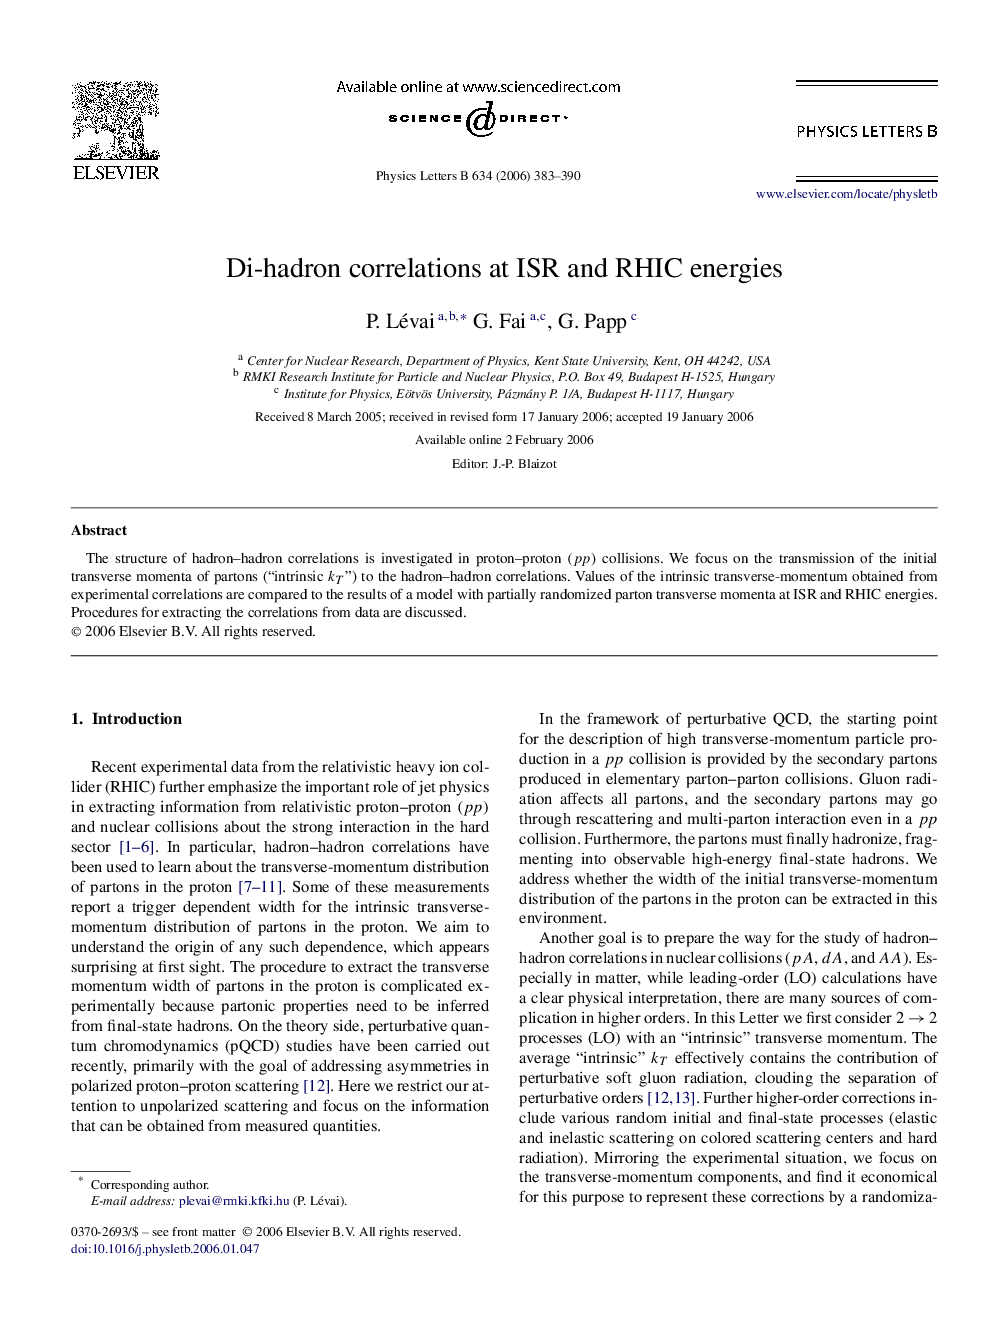 Di-hadron correlations at ISR and RHIC energies